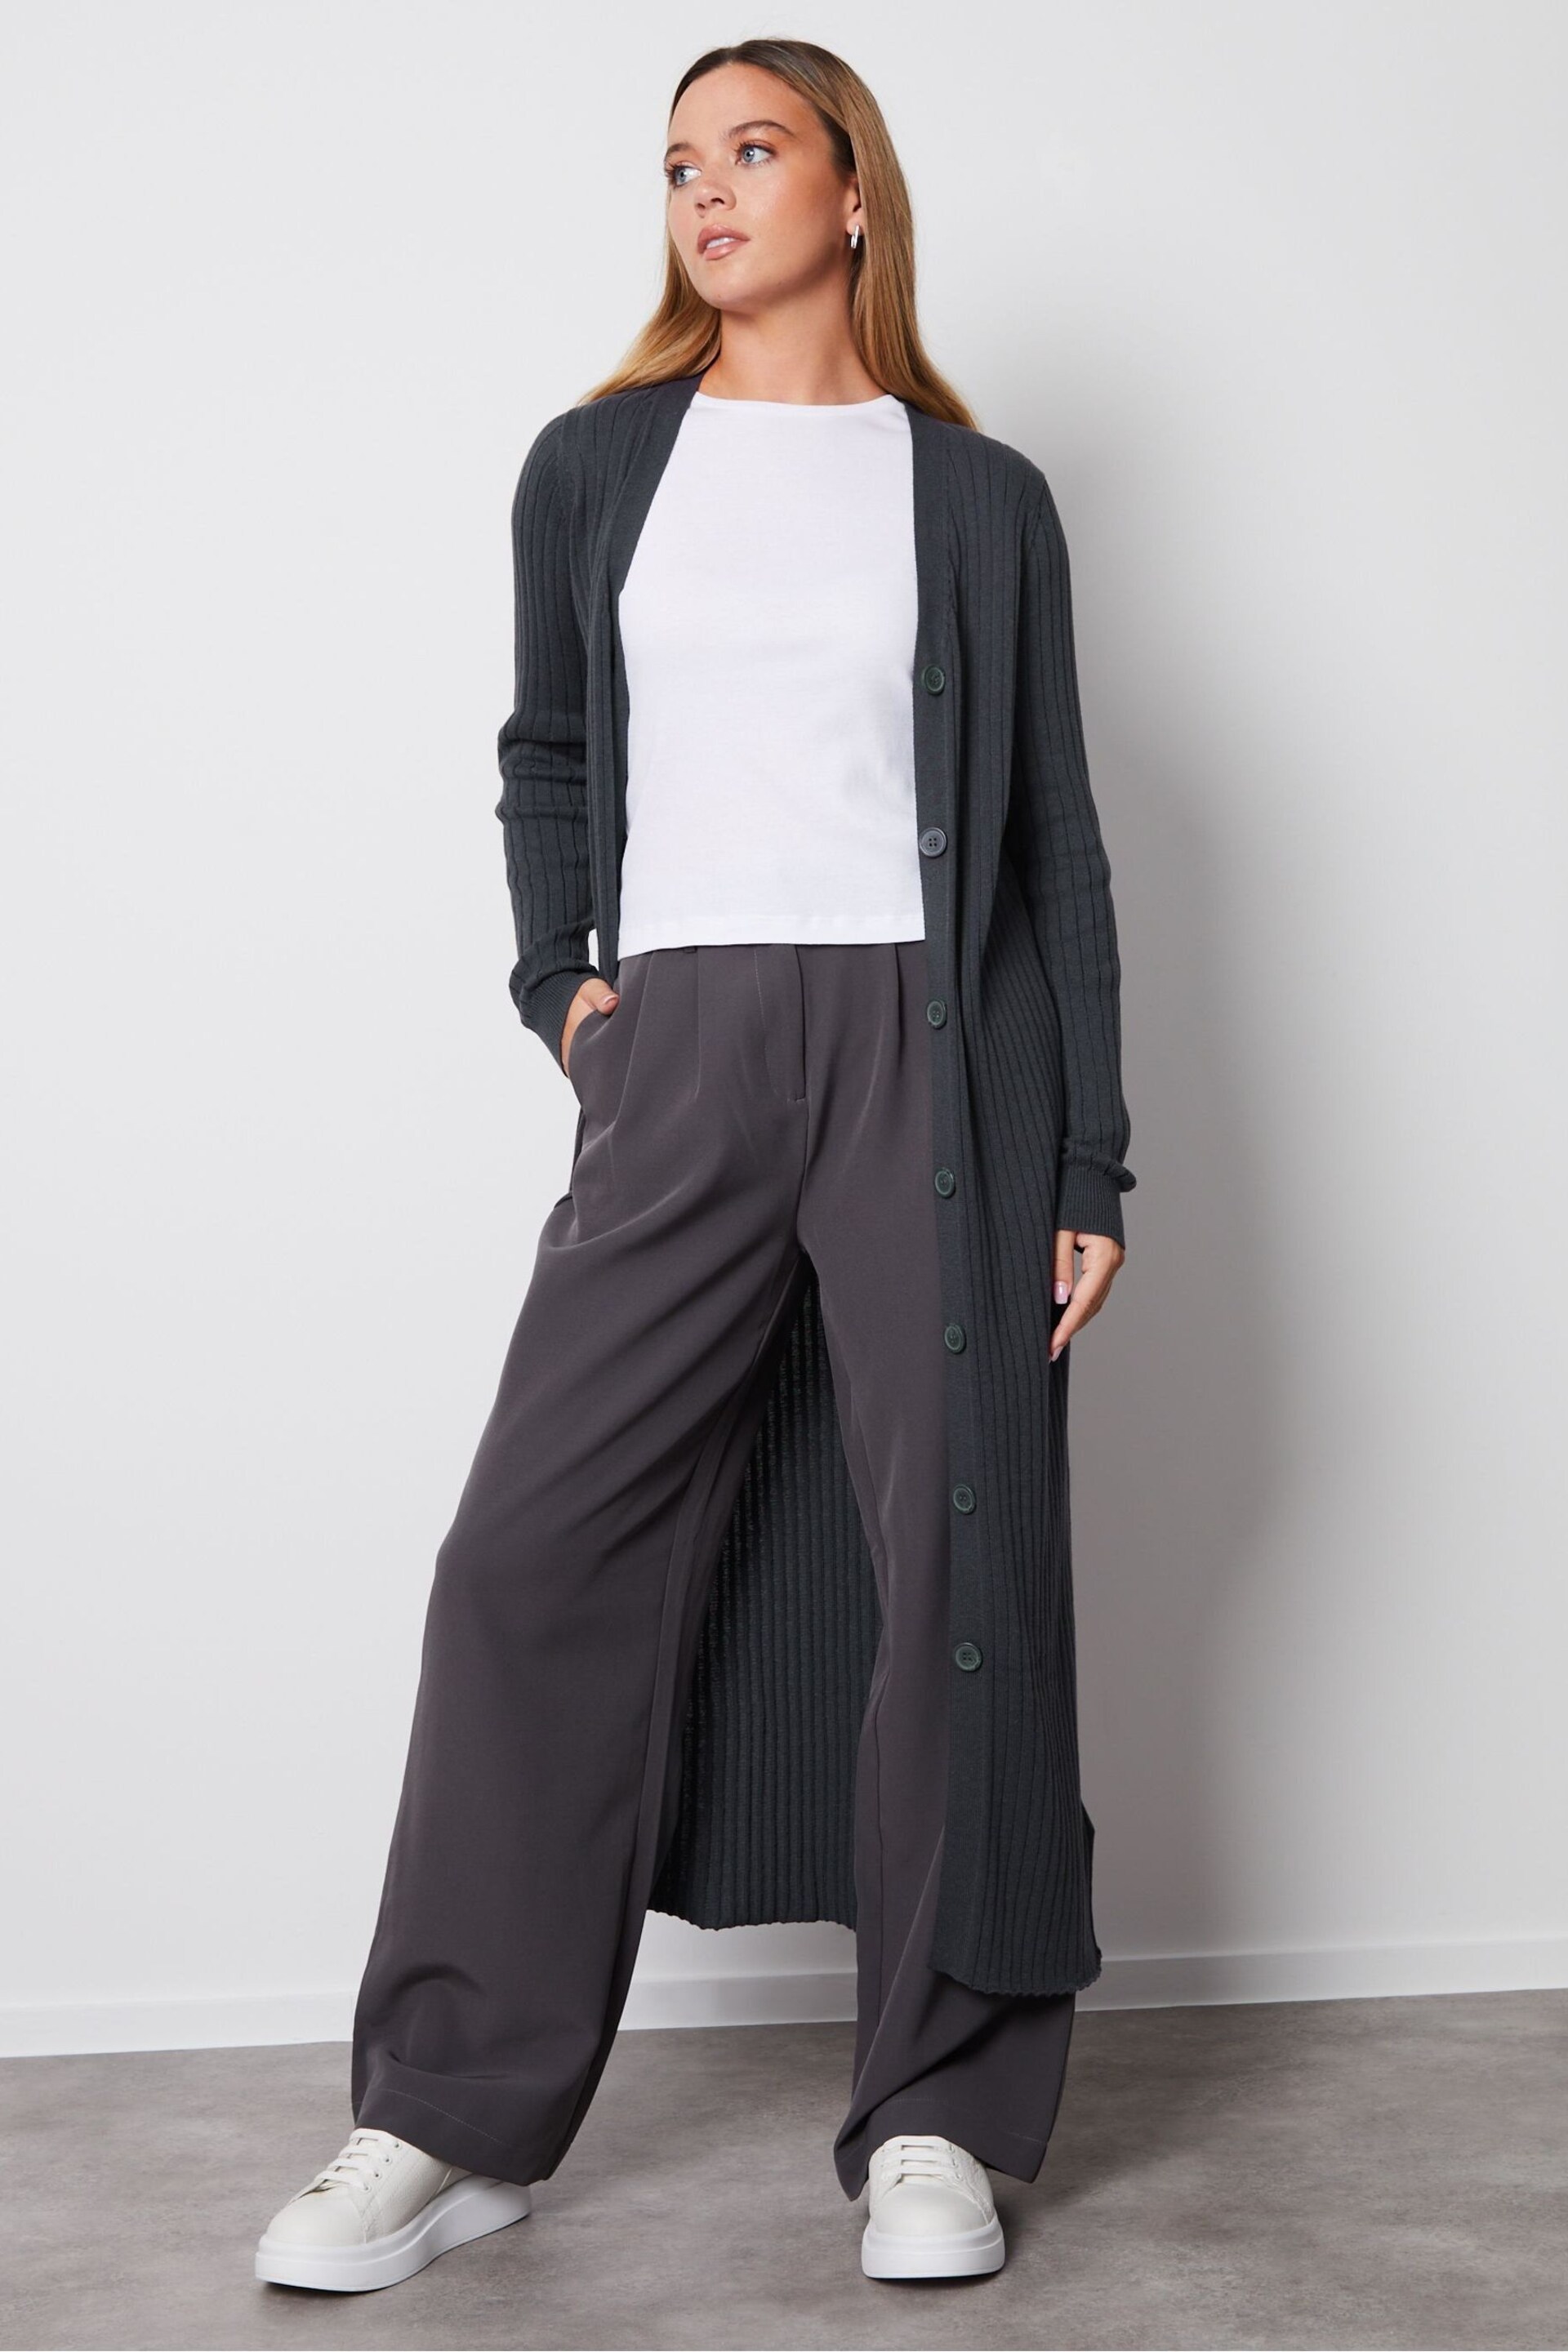 Threadbare Grey Cardigan Style Knitted Midi Dress - Image 2 of 5